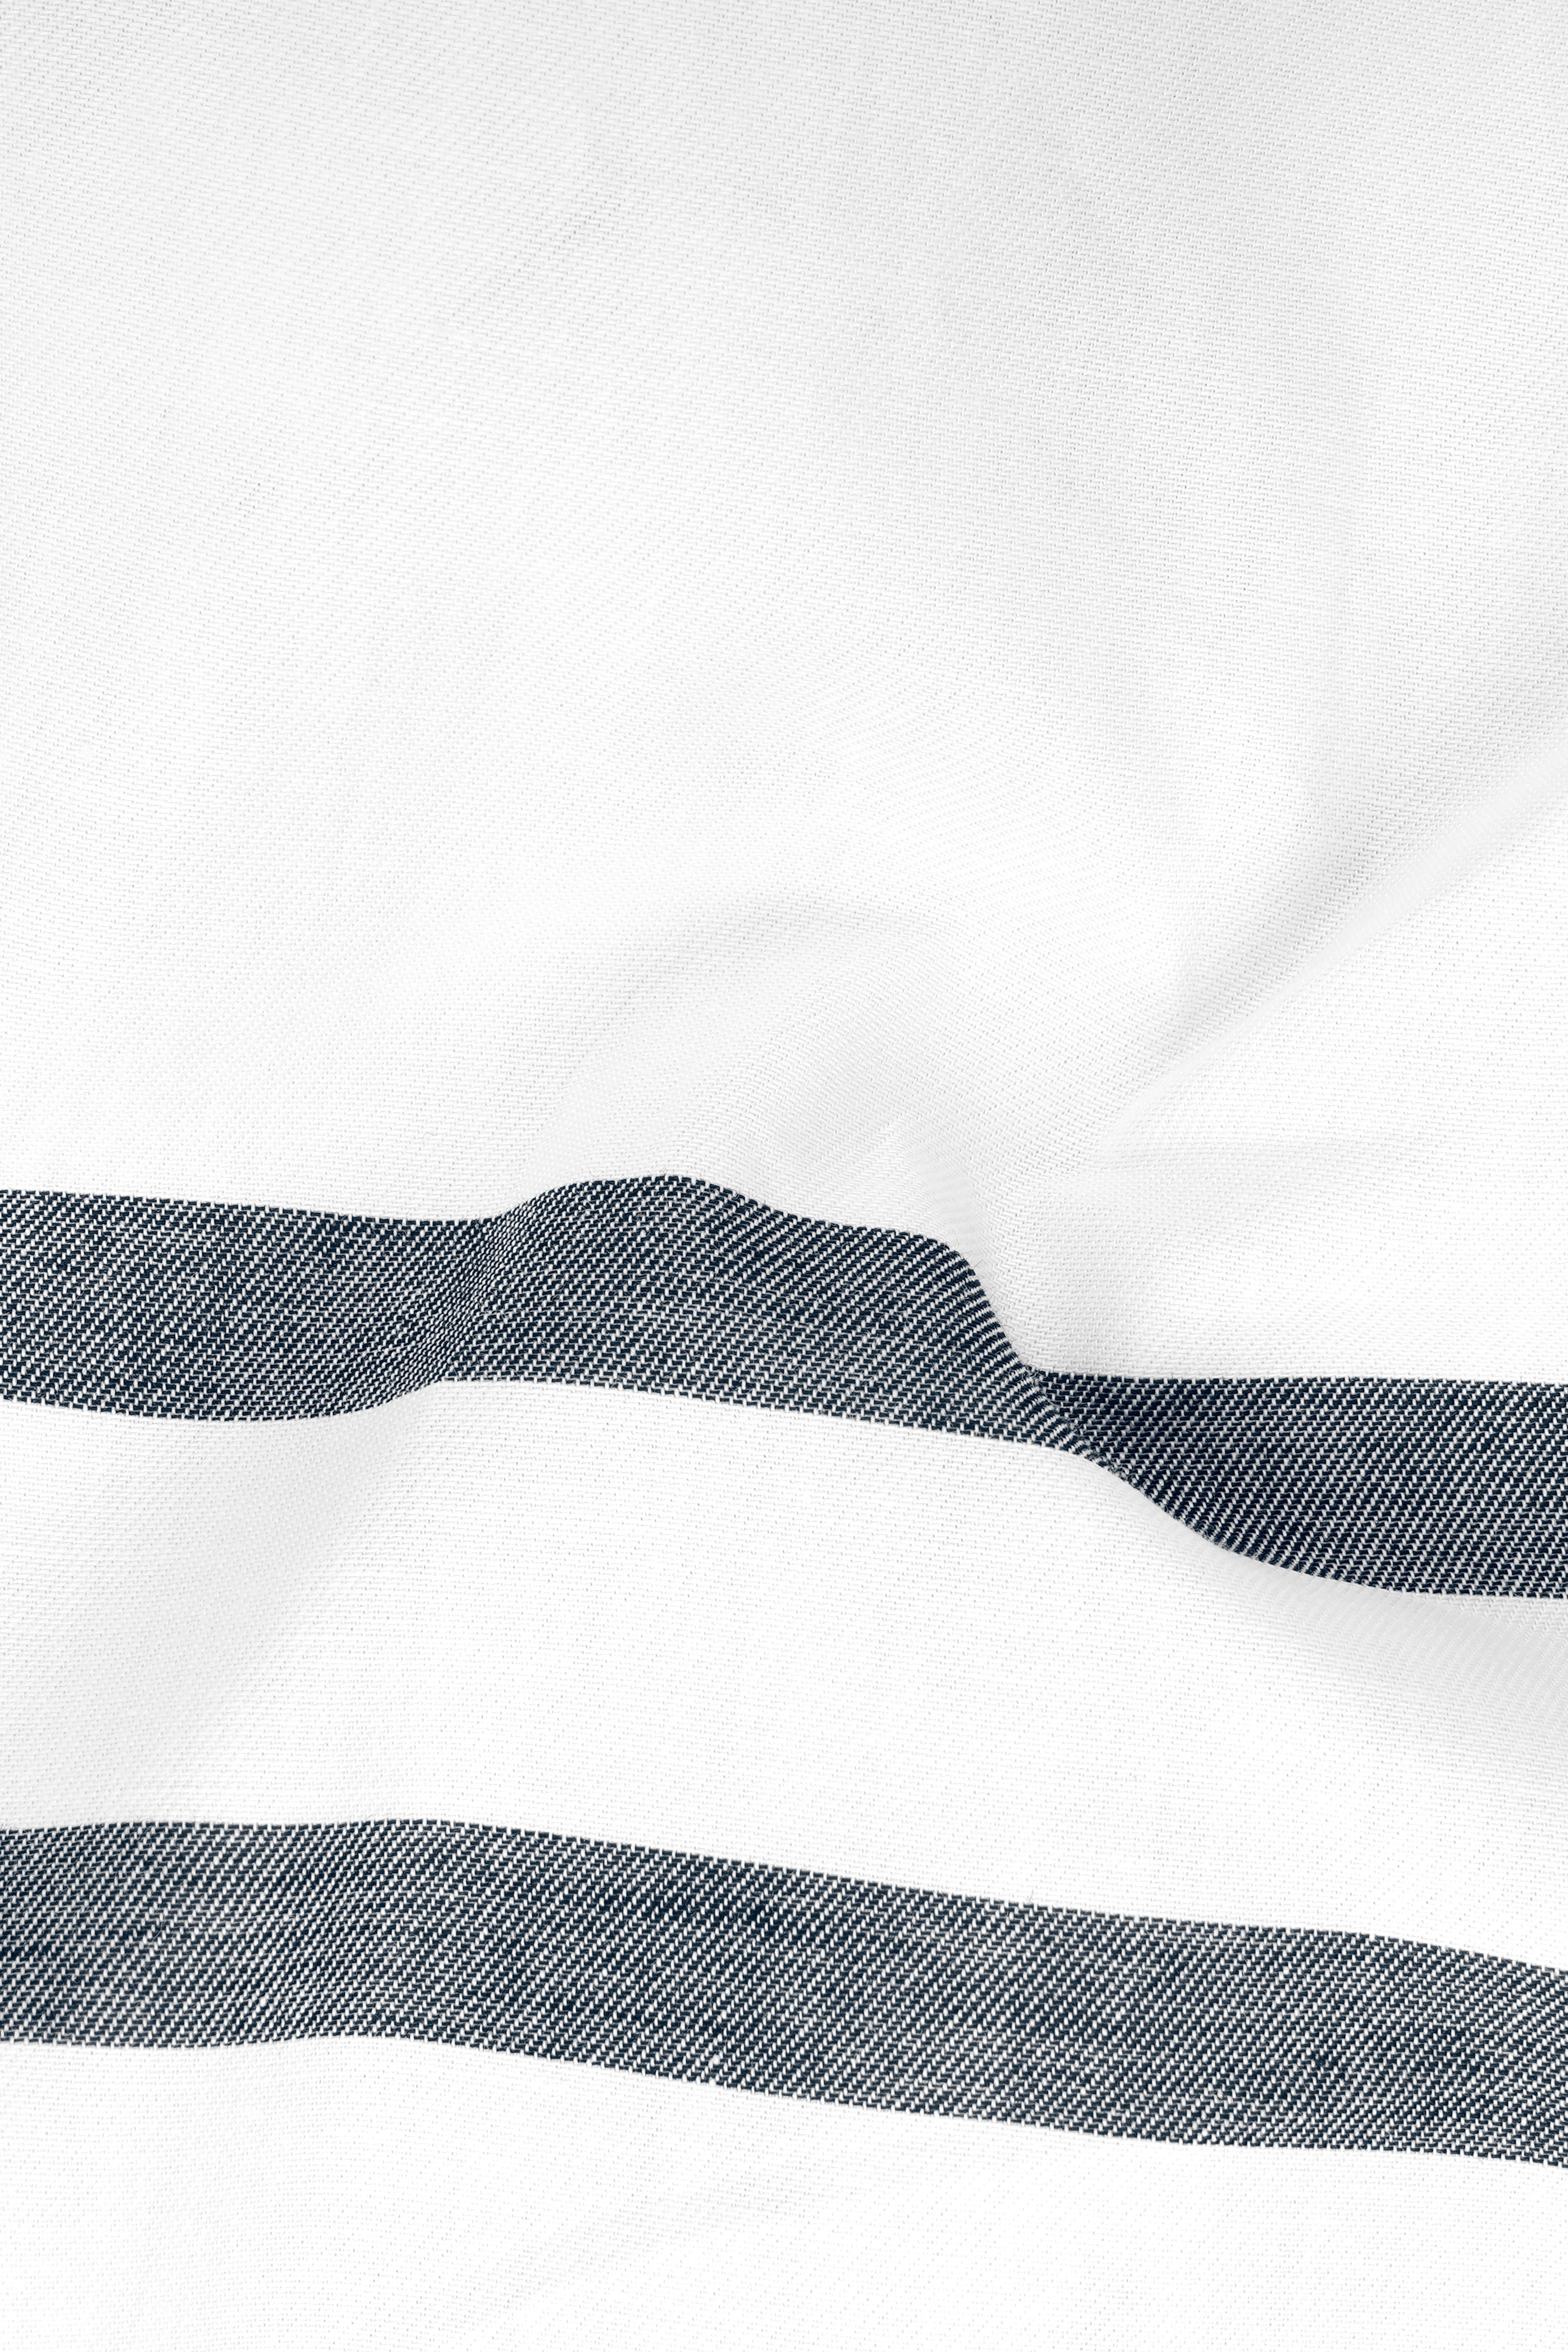 Bright White with Gravel Gray Horizontal Striped Twill Cotton Shirt